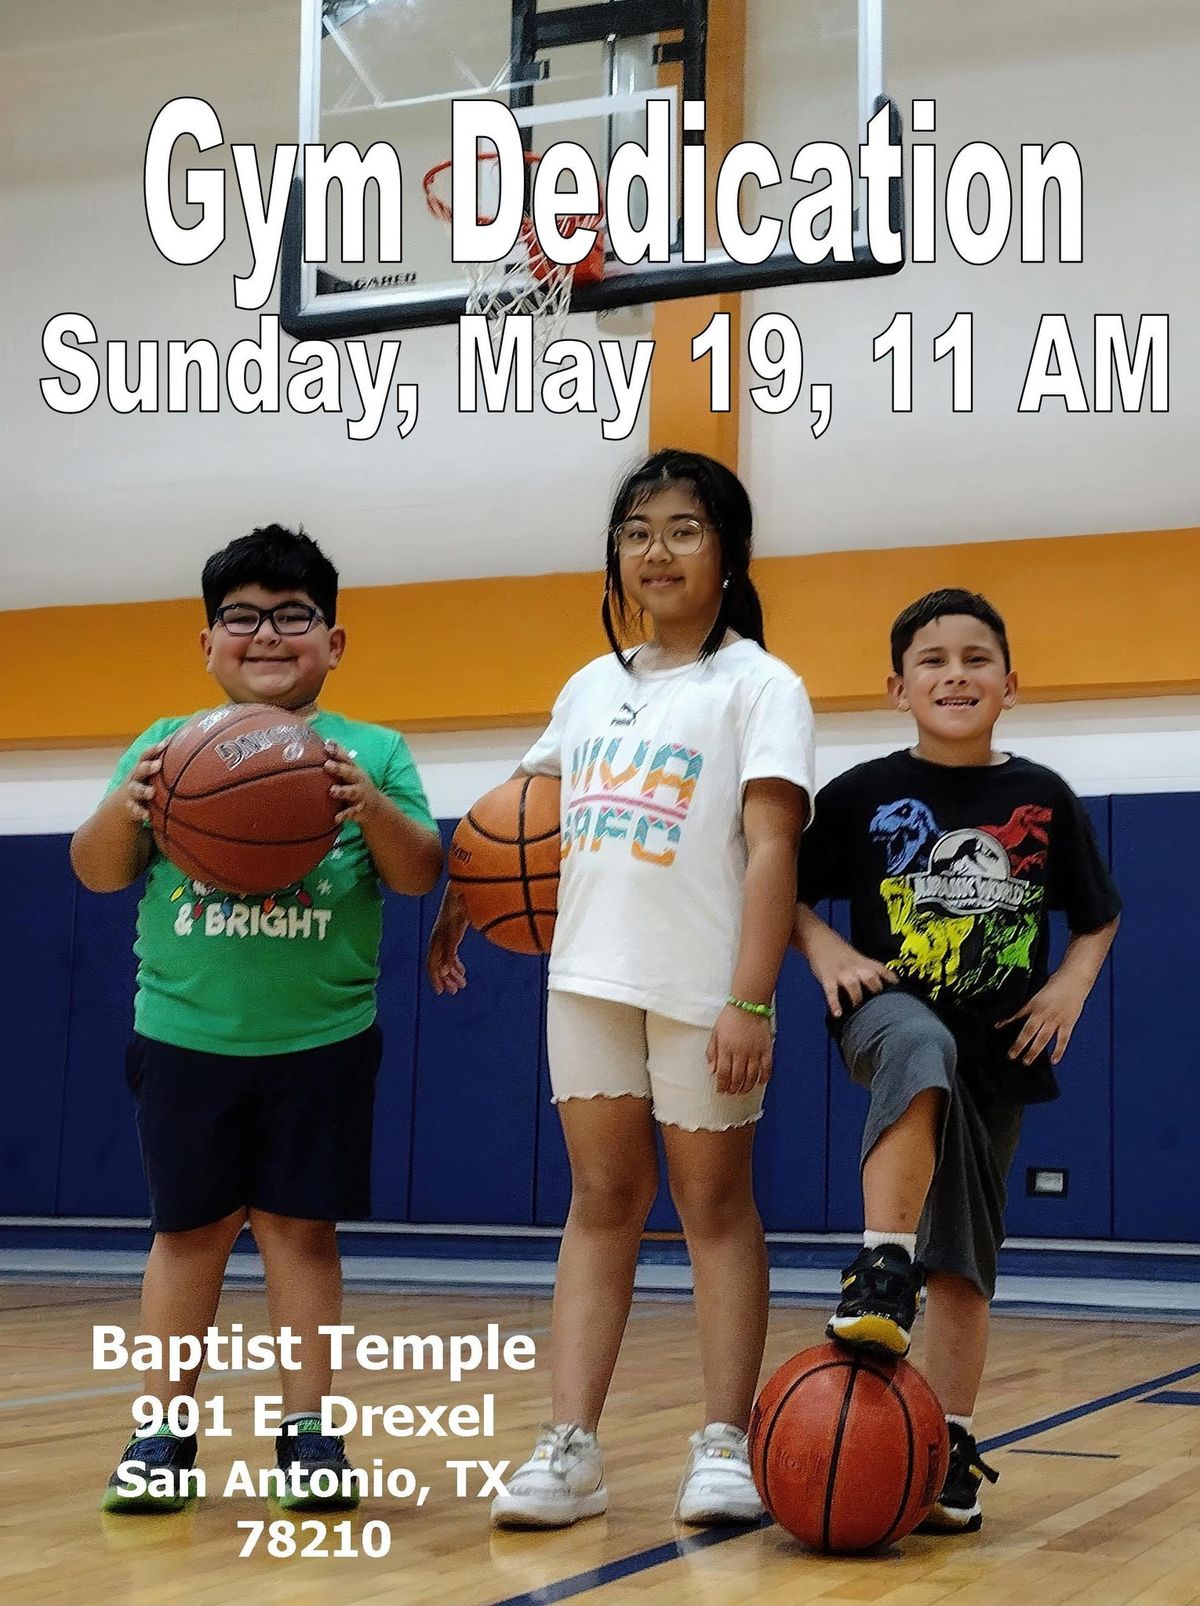 Baptist Temple Gym Dedication